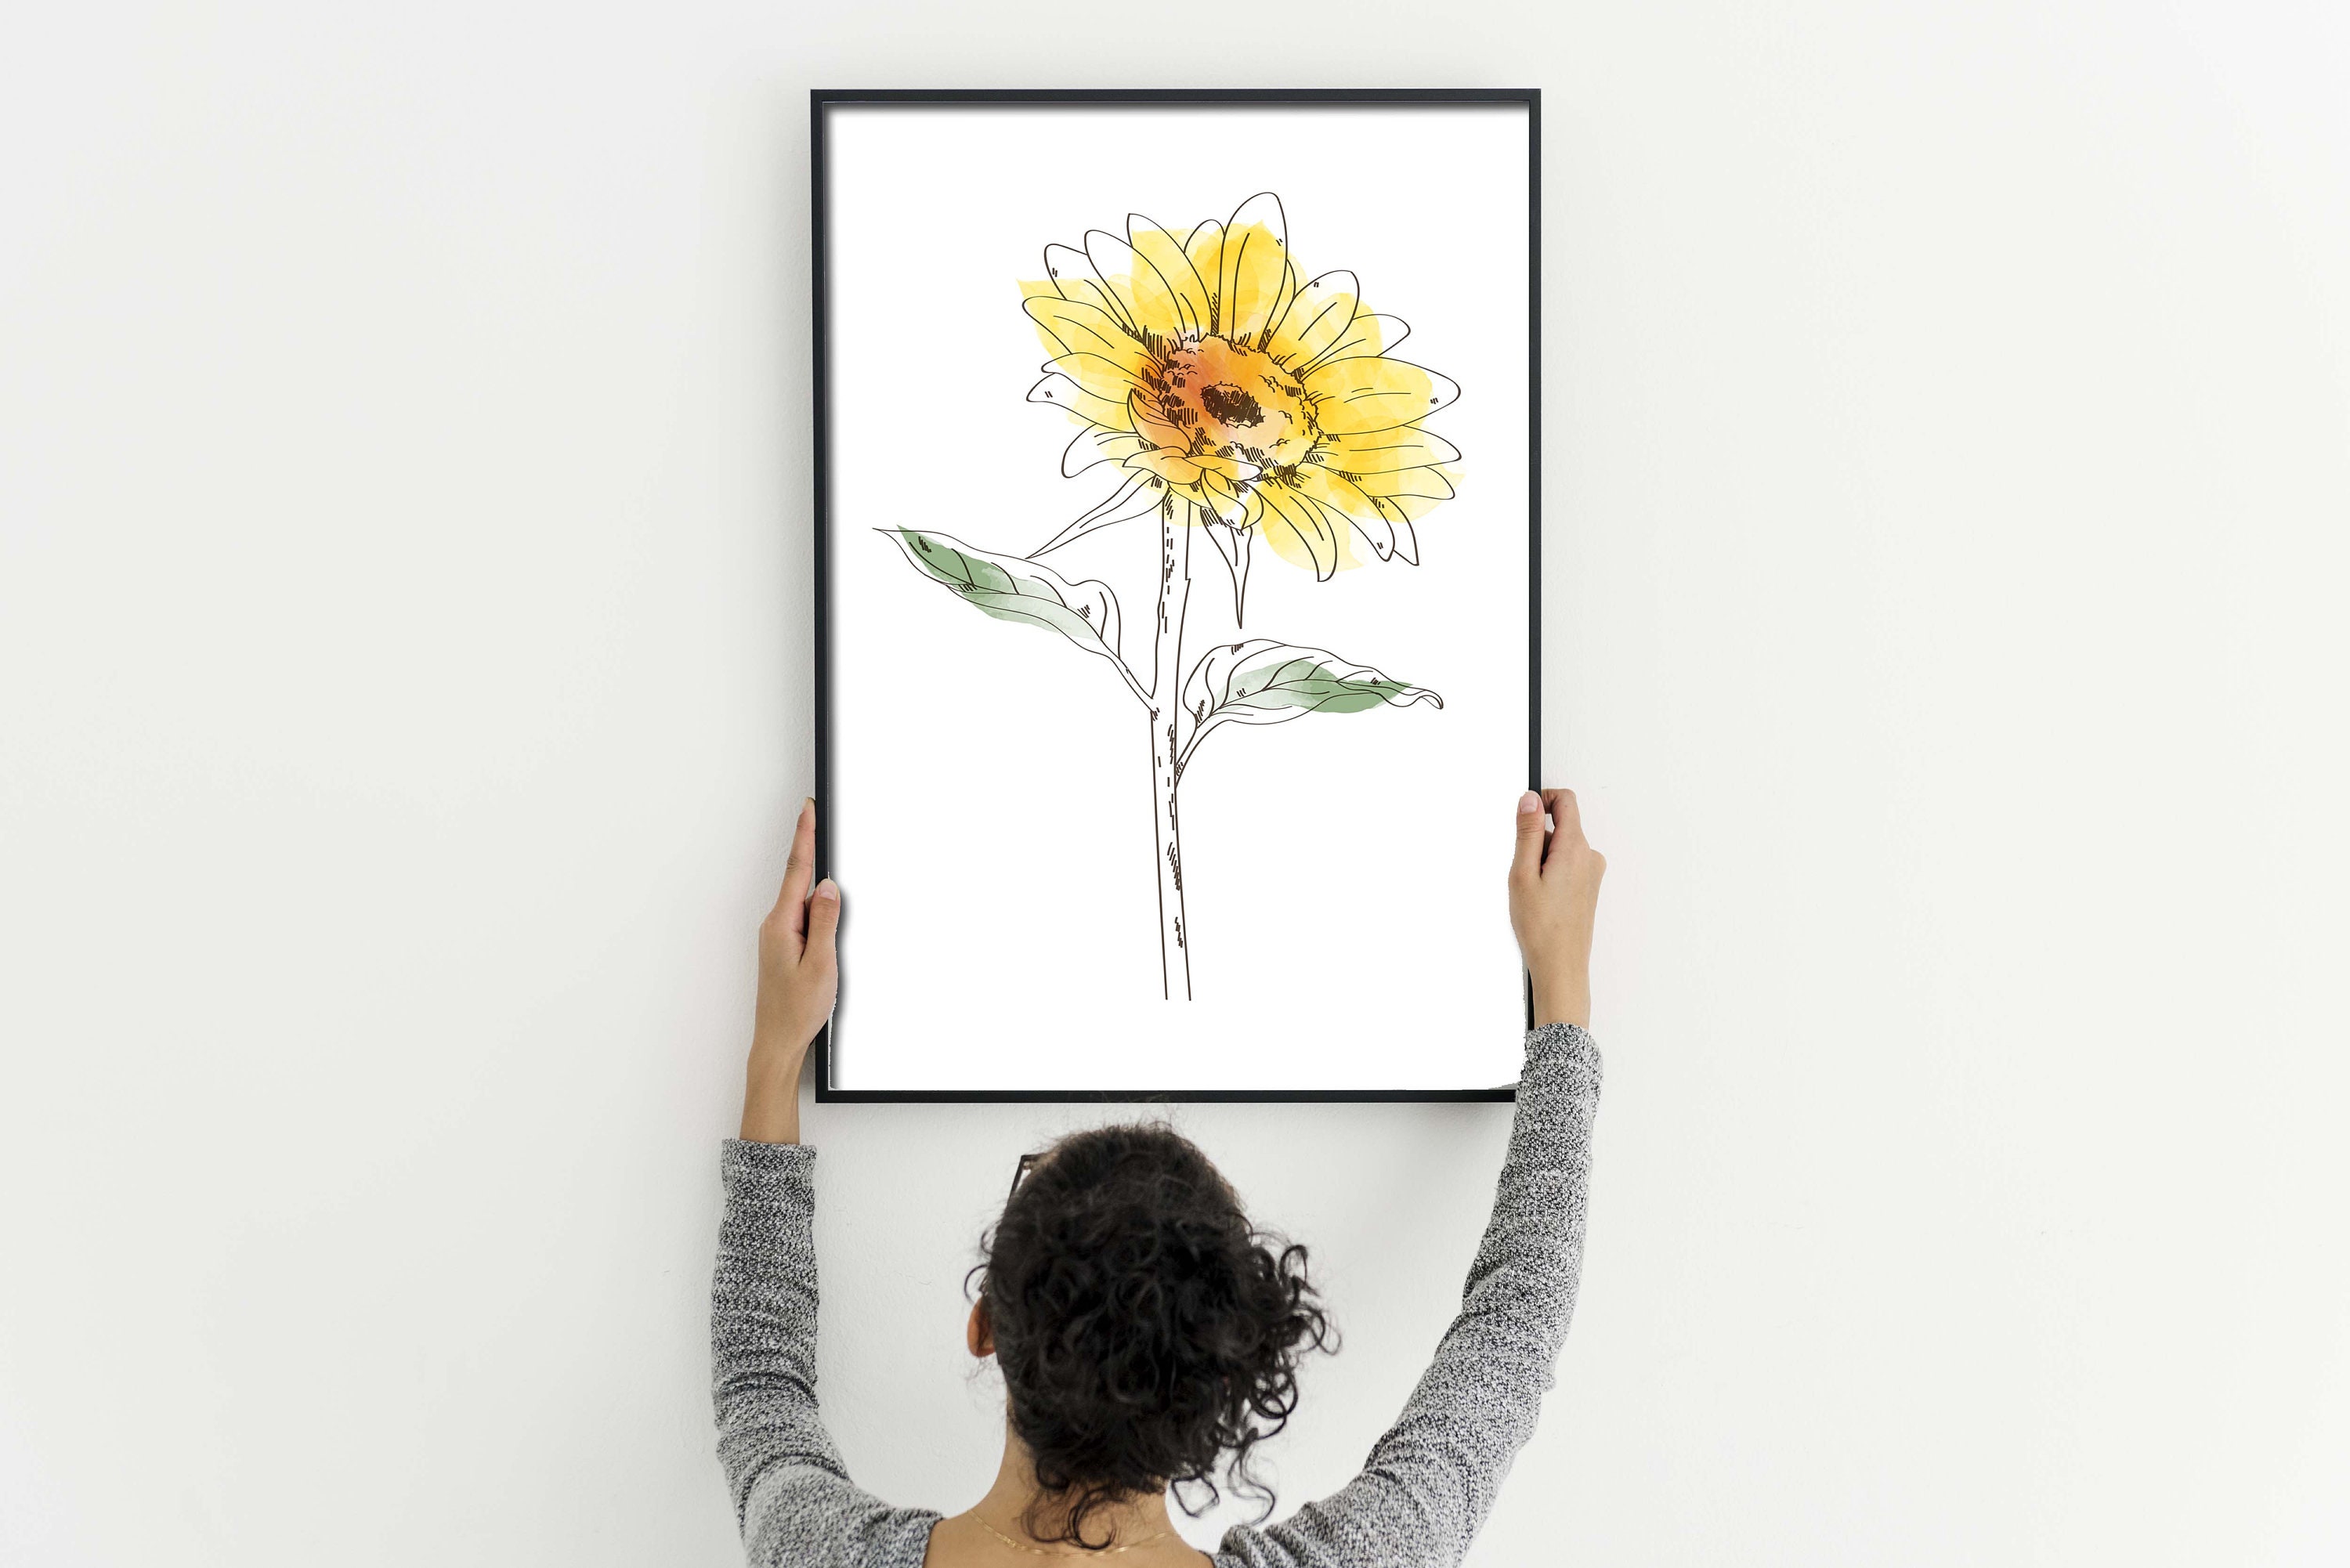 Sunflowers A5 Sketchbook 